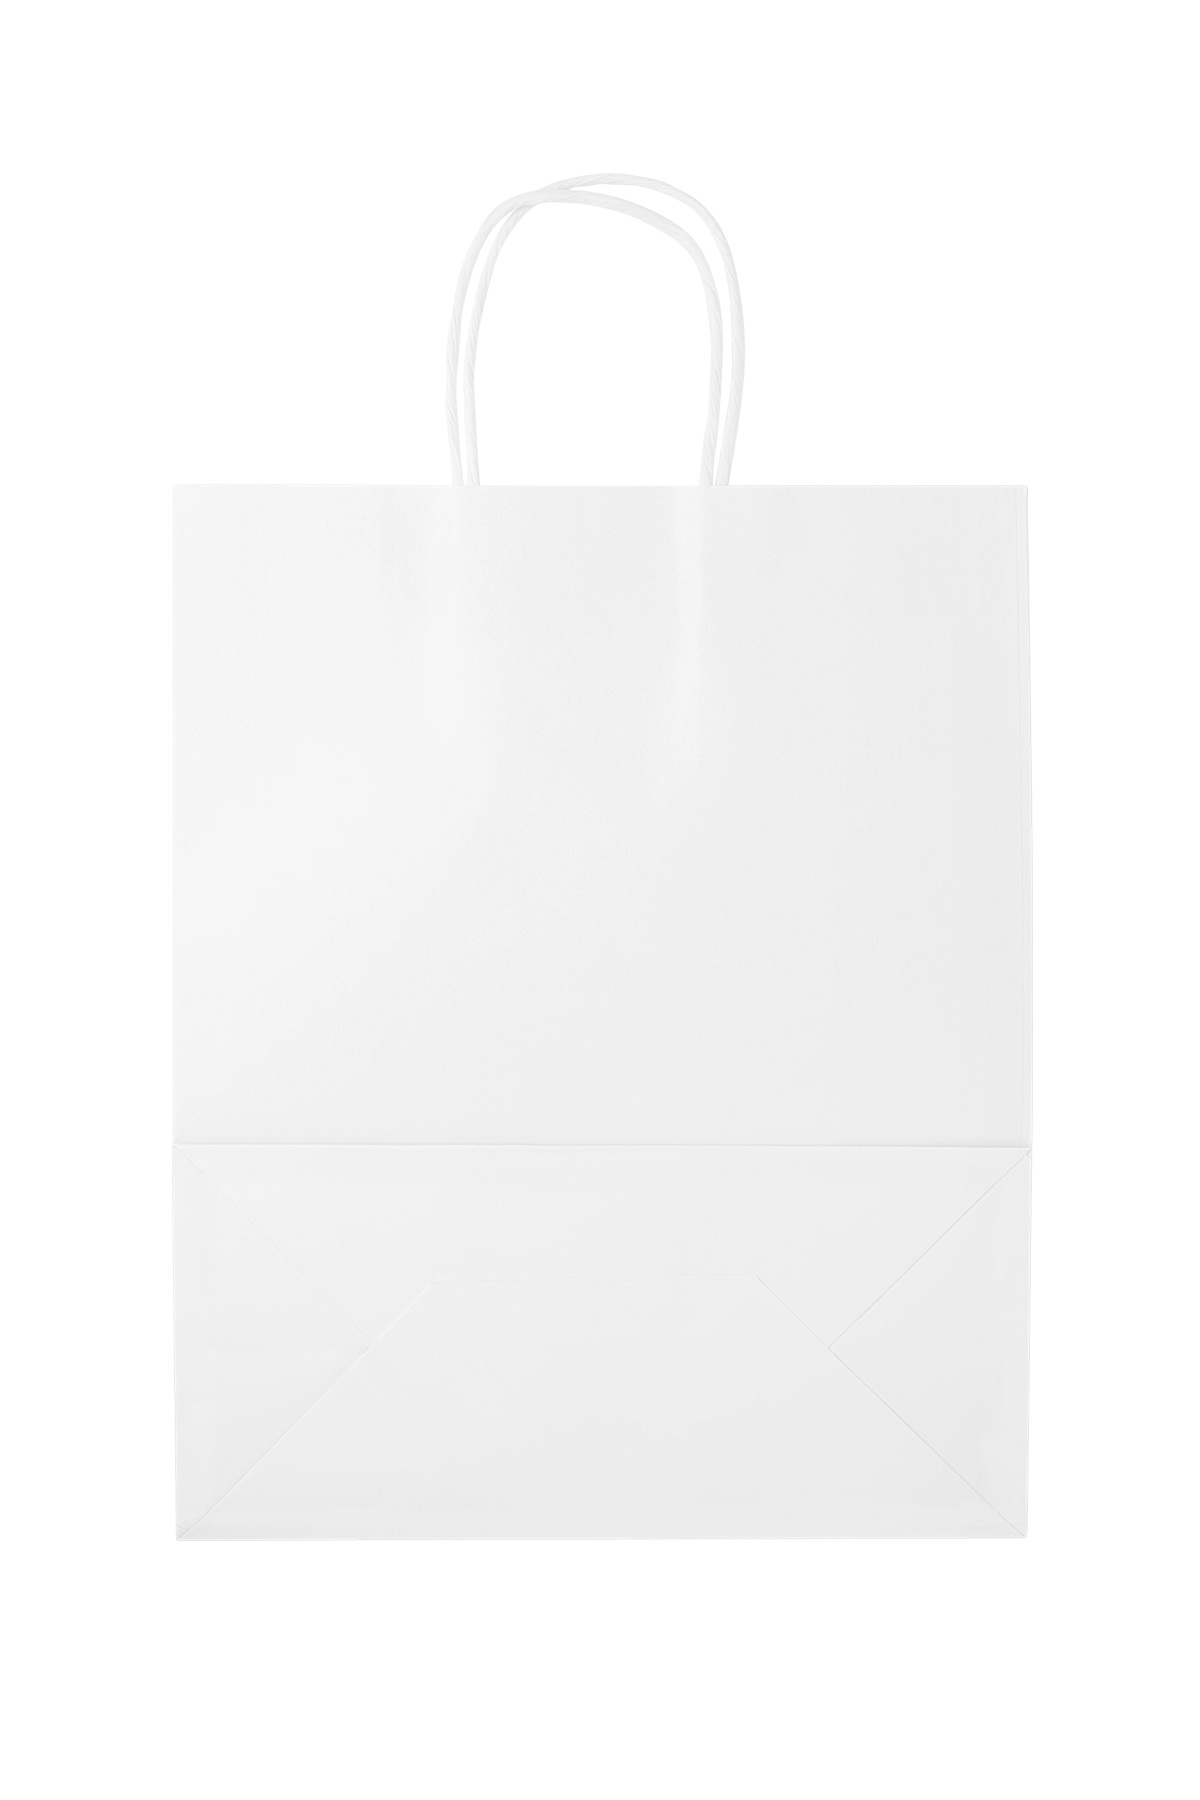 Bags plain 50 pieces large - white Paper h5 Picture2